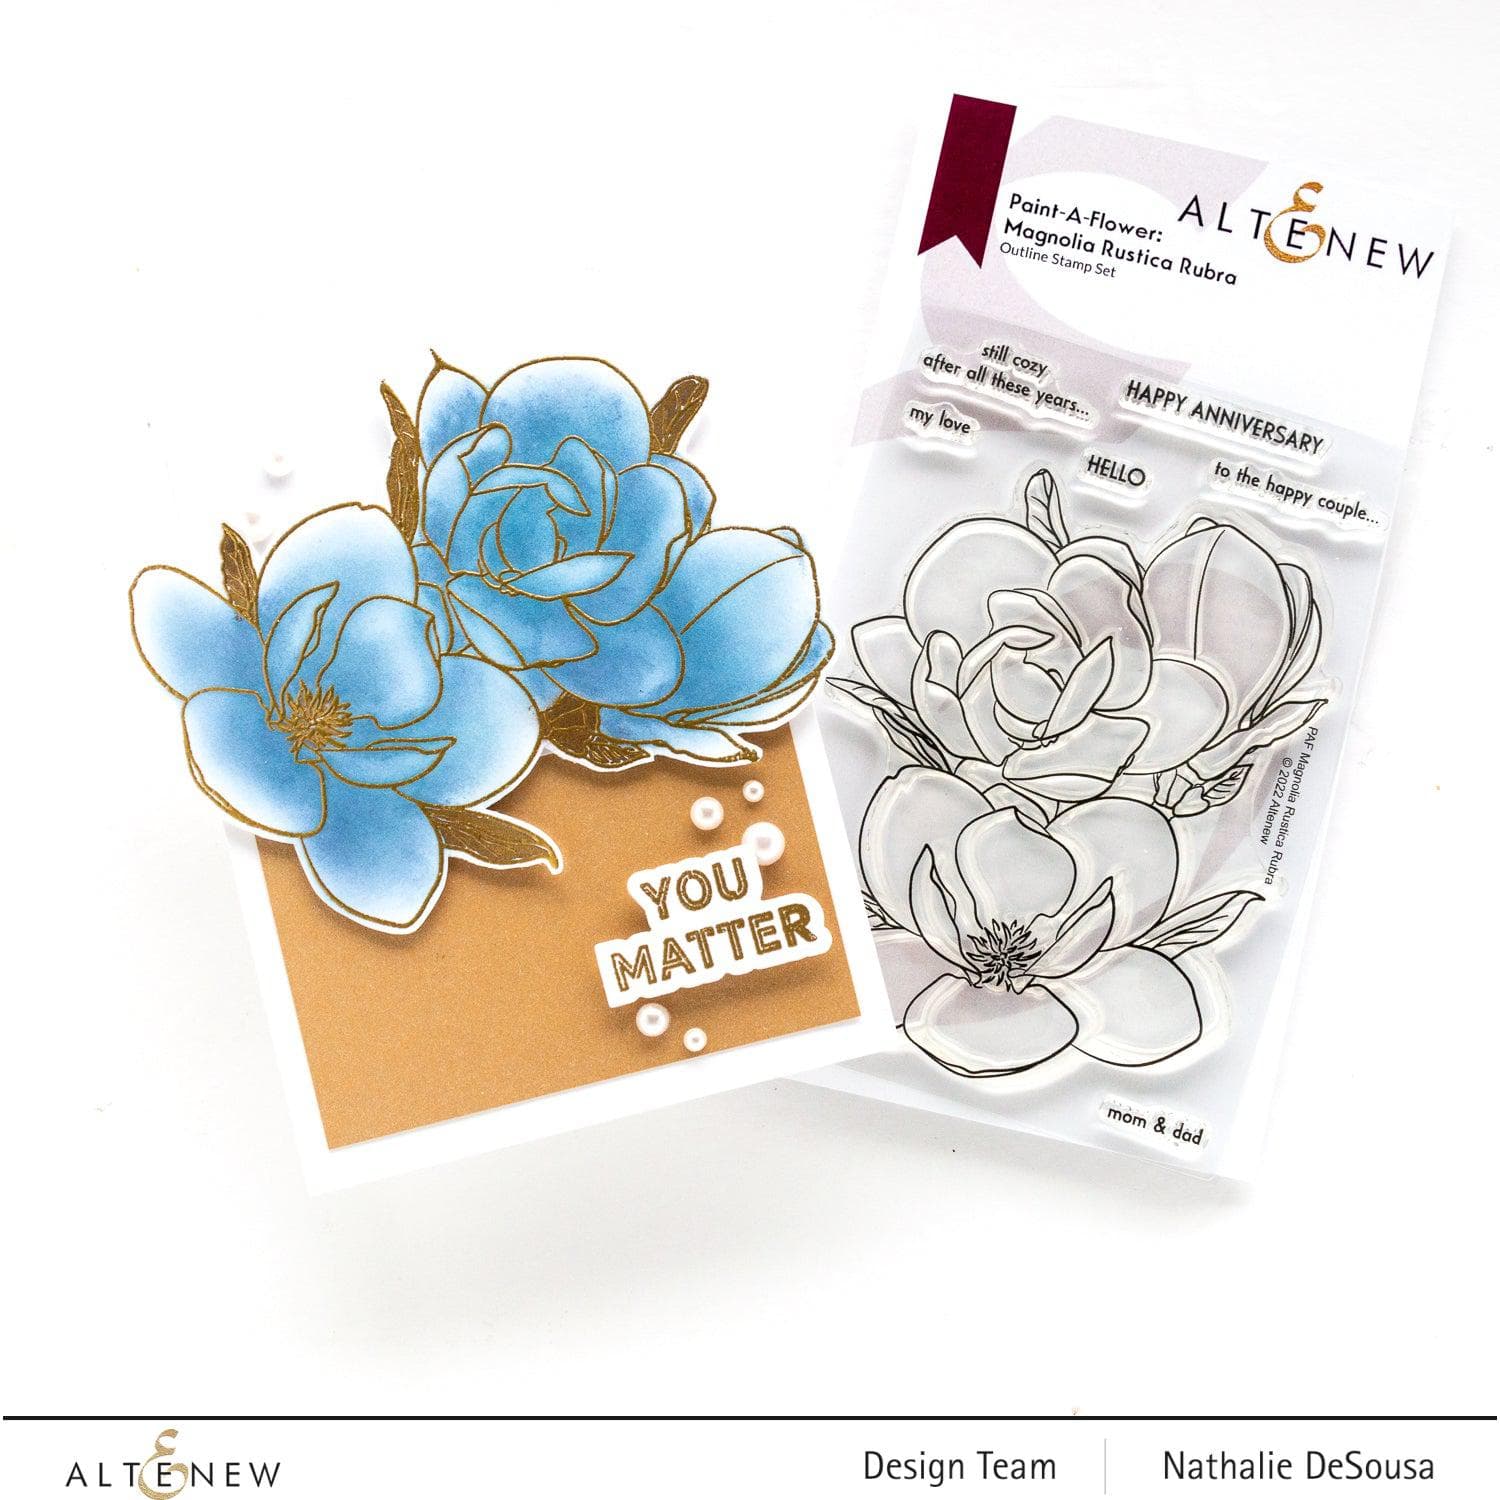 Mangocraft Original Design Painted Flowers Floral Stamps - Temu